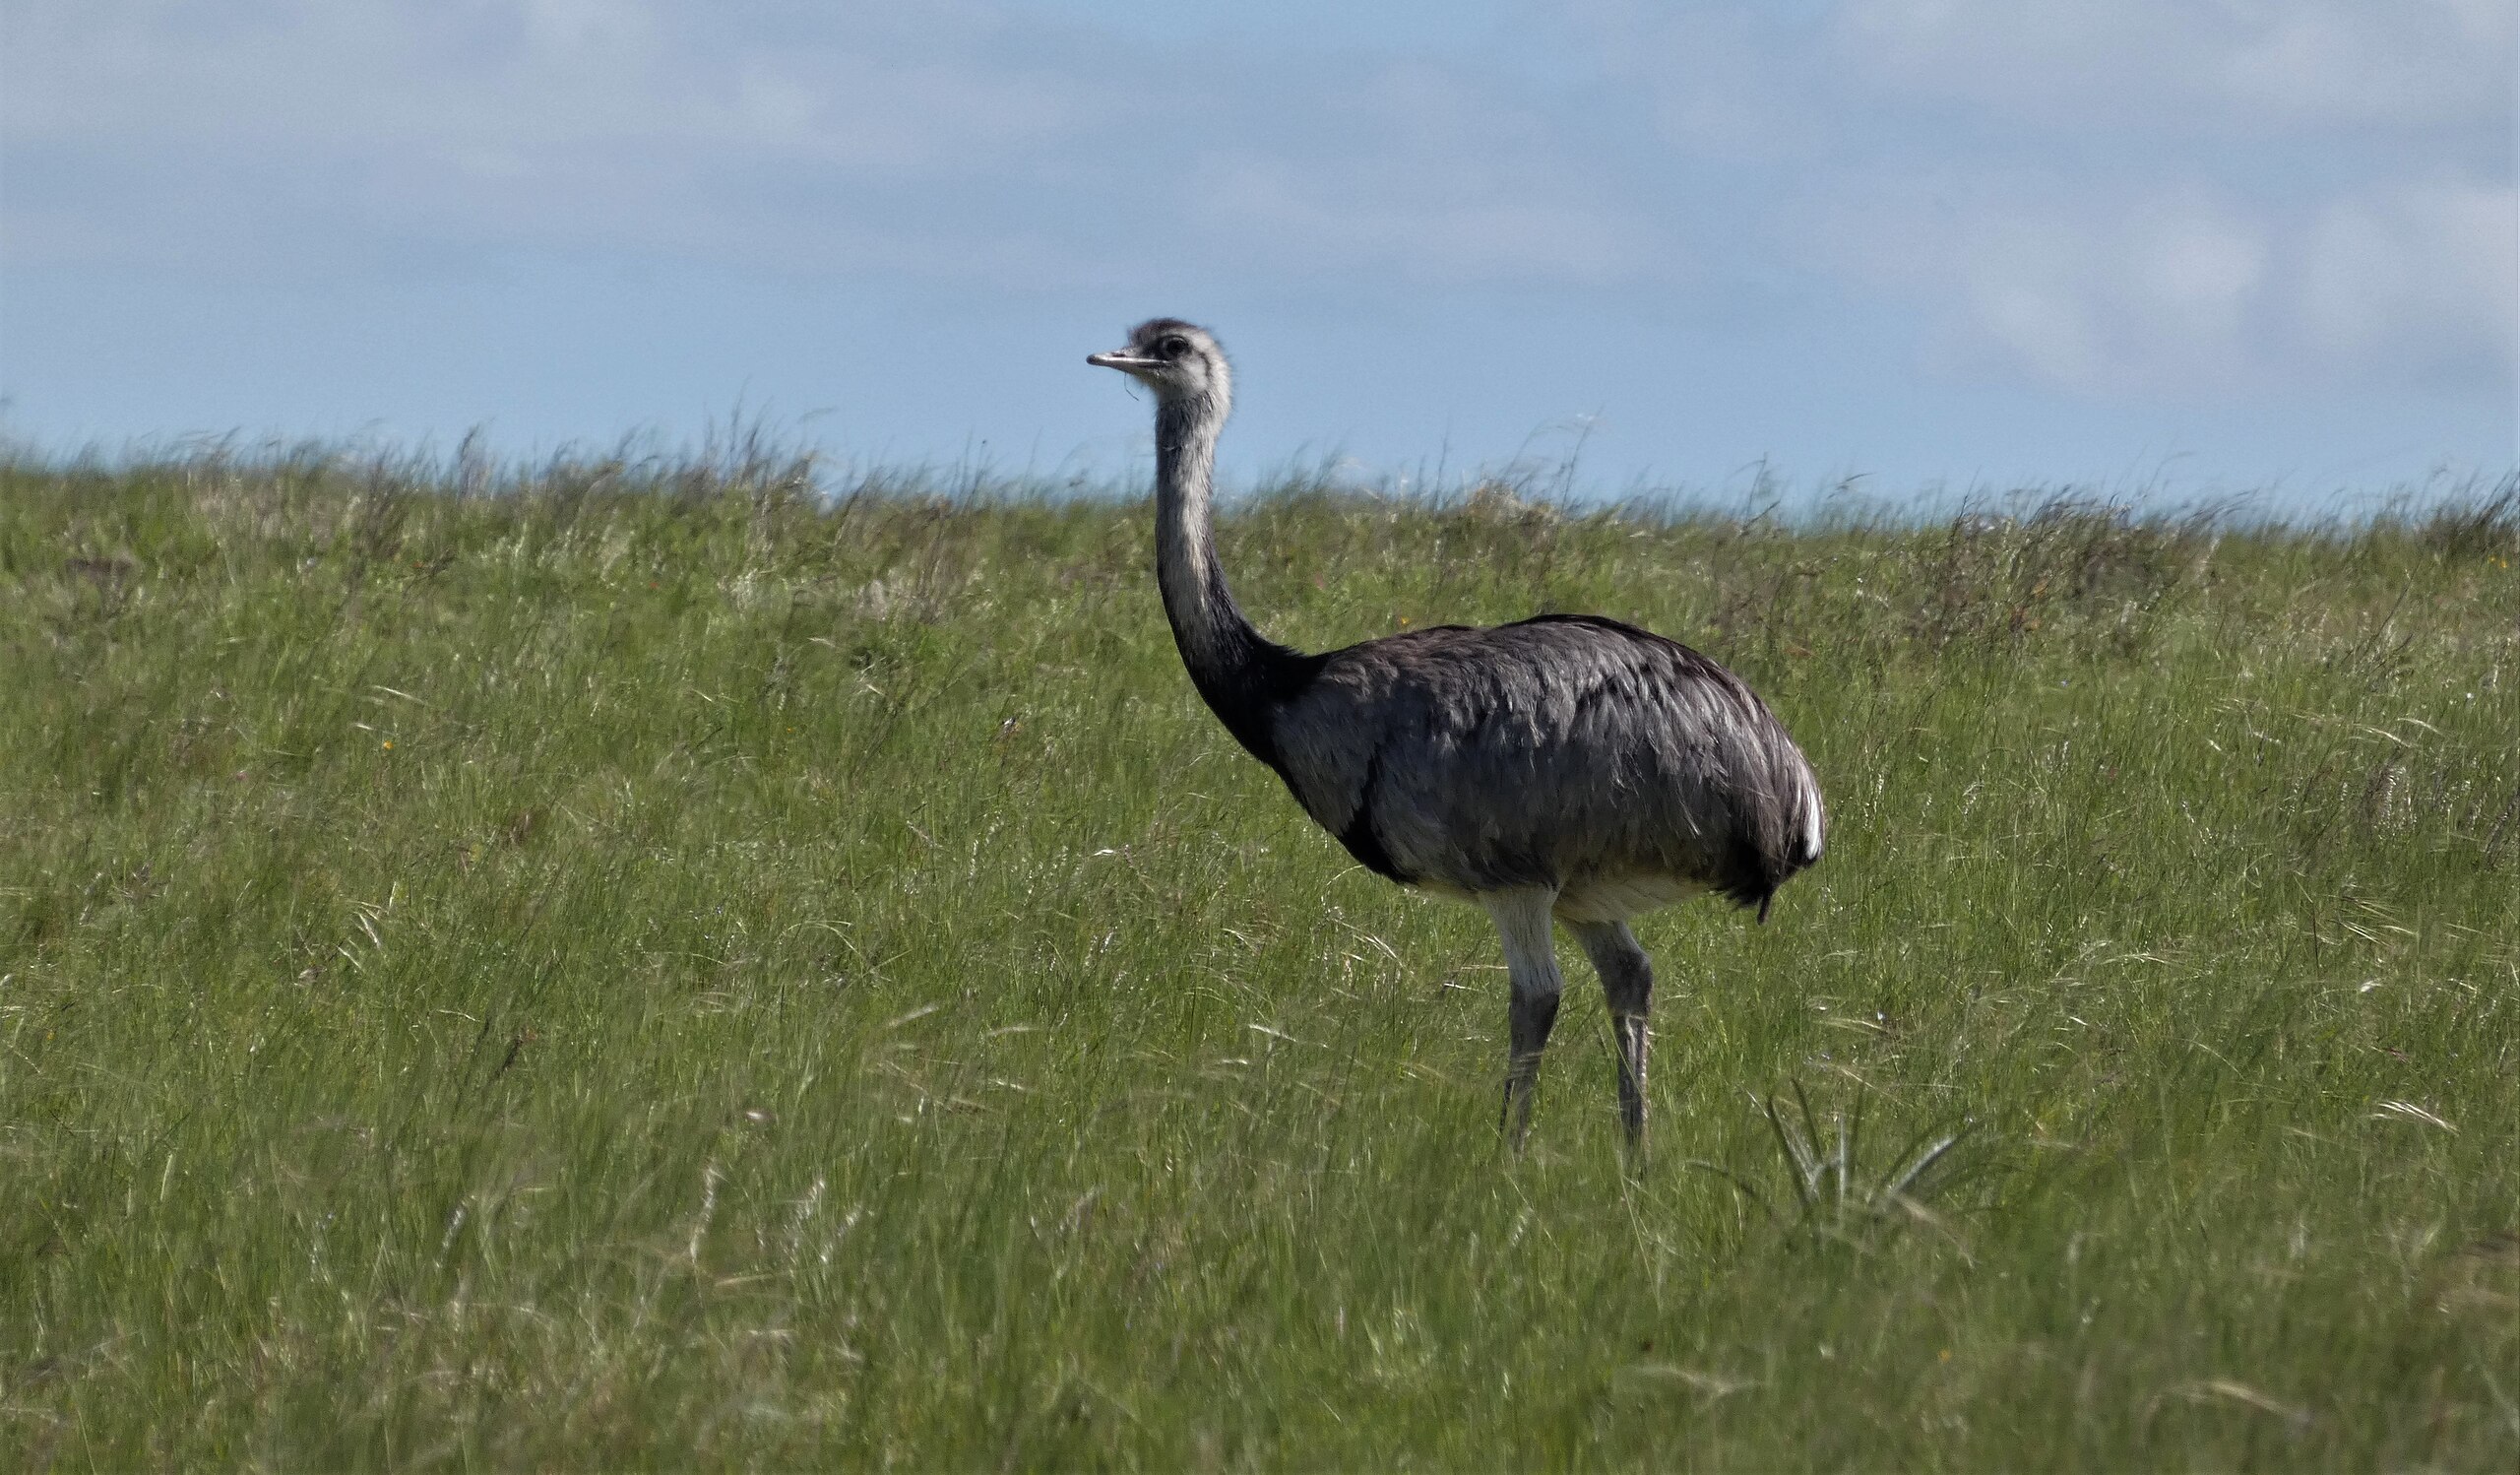 Photograph of a large, flightless bird standing in a field of grass. The bird has a long, snake-like neck and long legs.